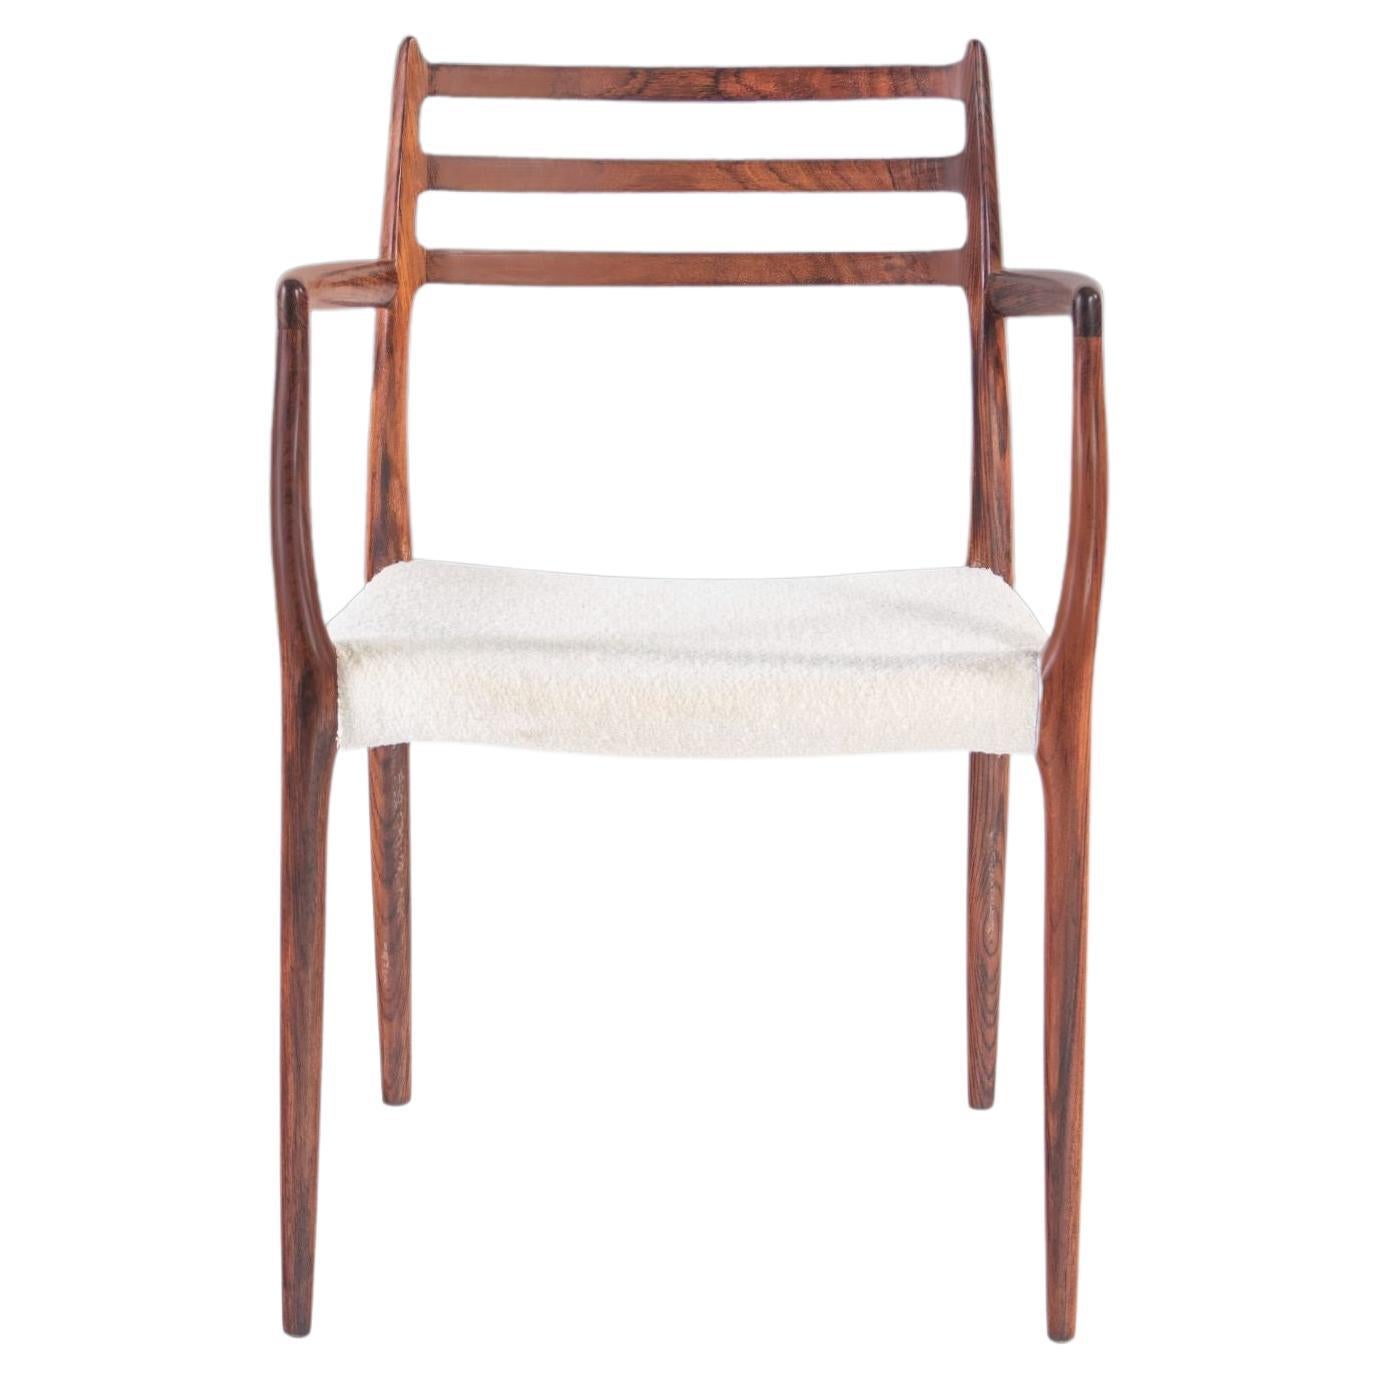 Model 62 Rosewood Arm Chair by Niels Møller for J.L. Møllers, Denmark, c. 1962 For Sale